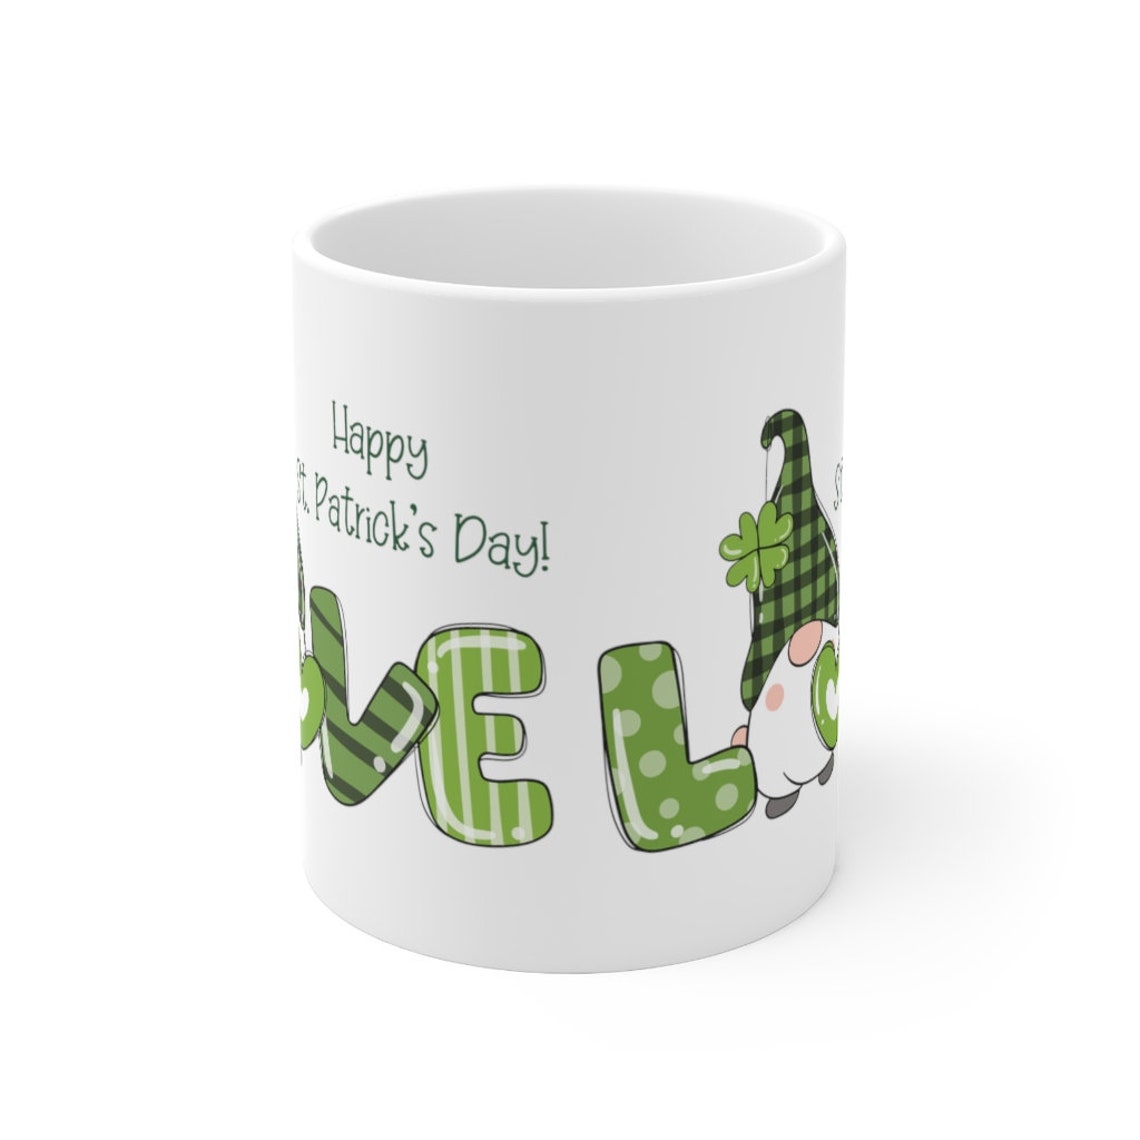 Happy St. Patrick's Day - Love Gnome Mug